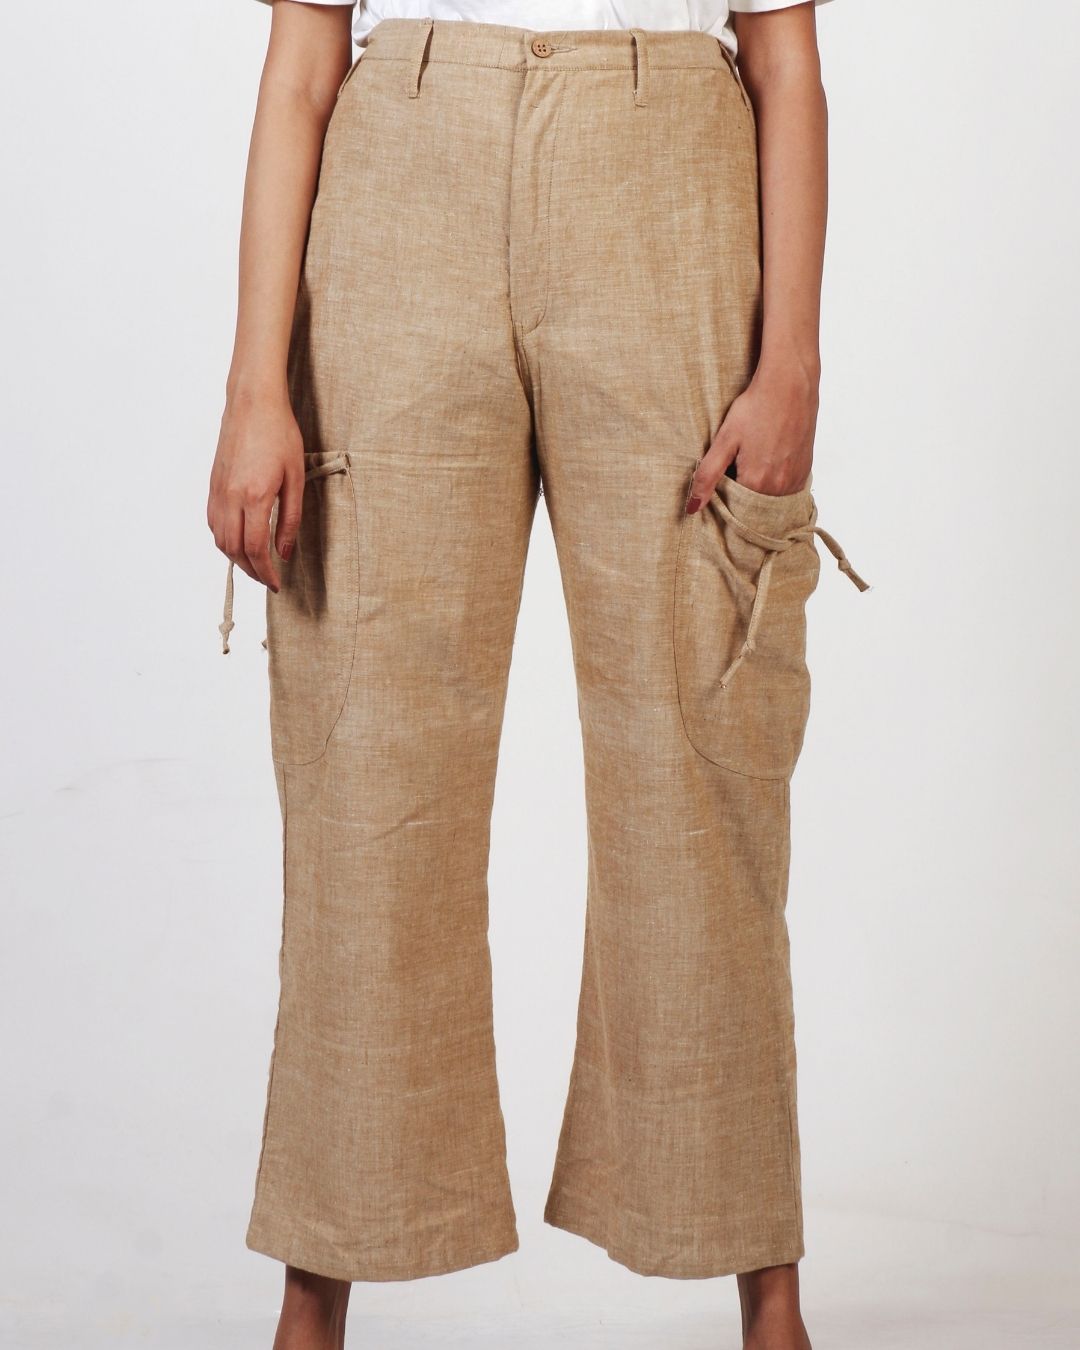 Maahi Khadi Cotton Solid Shirt & Trouser Fabric Price in India - Buy Maahi Khadi  Cotton Solid Shirt & Trouser Fabric online at Flipkart.com